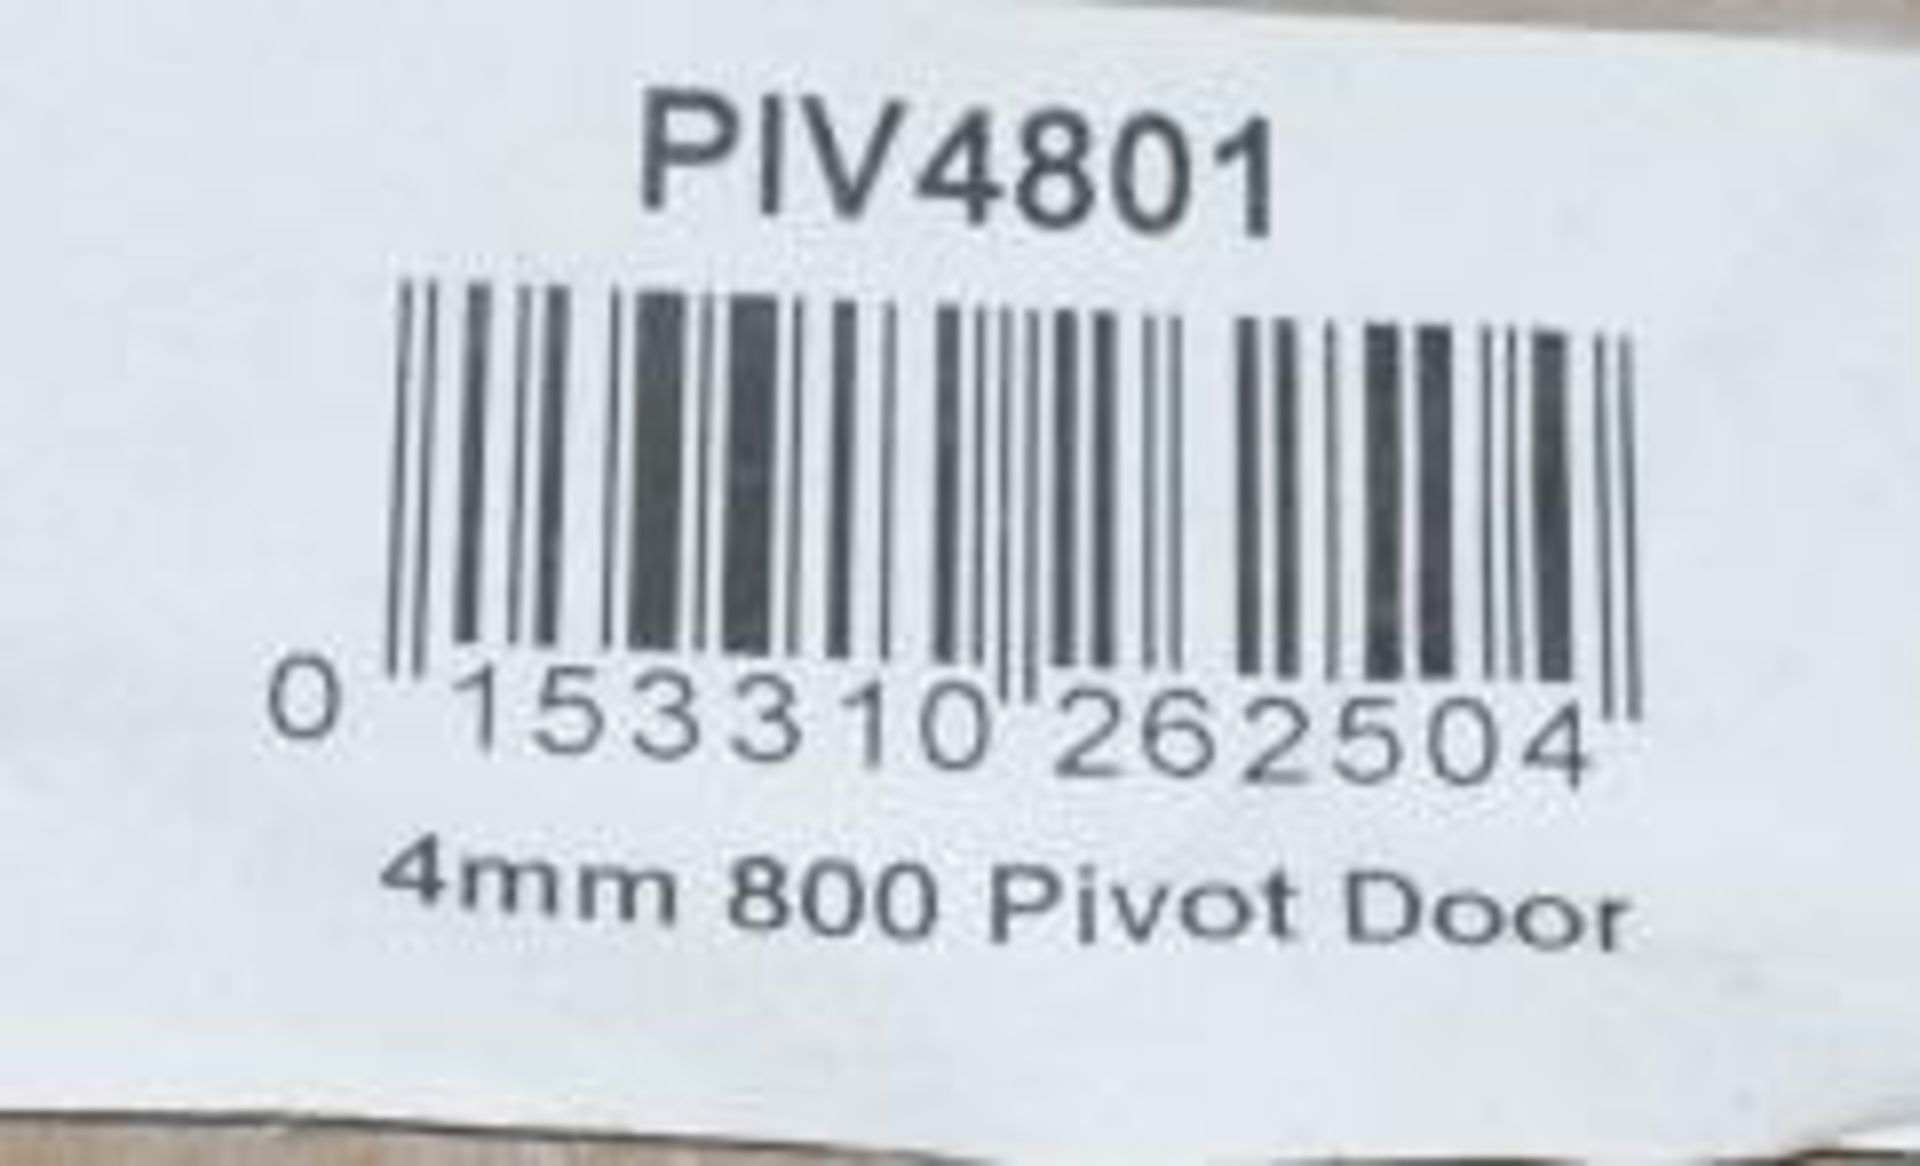 1 x 4mm 800 Shower Pivot Door (PIV4801) - New / Unused Stock - Dimensions: 800 x 1850 x 4mm / 18 Kgs - Image 3 of 3